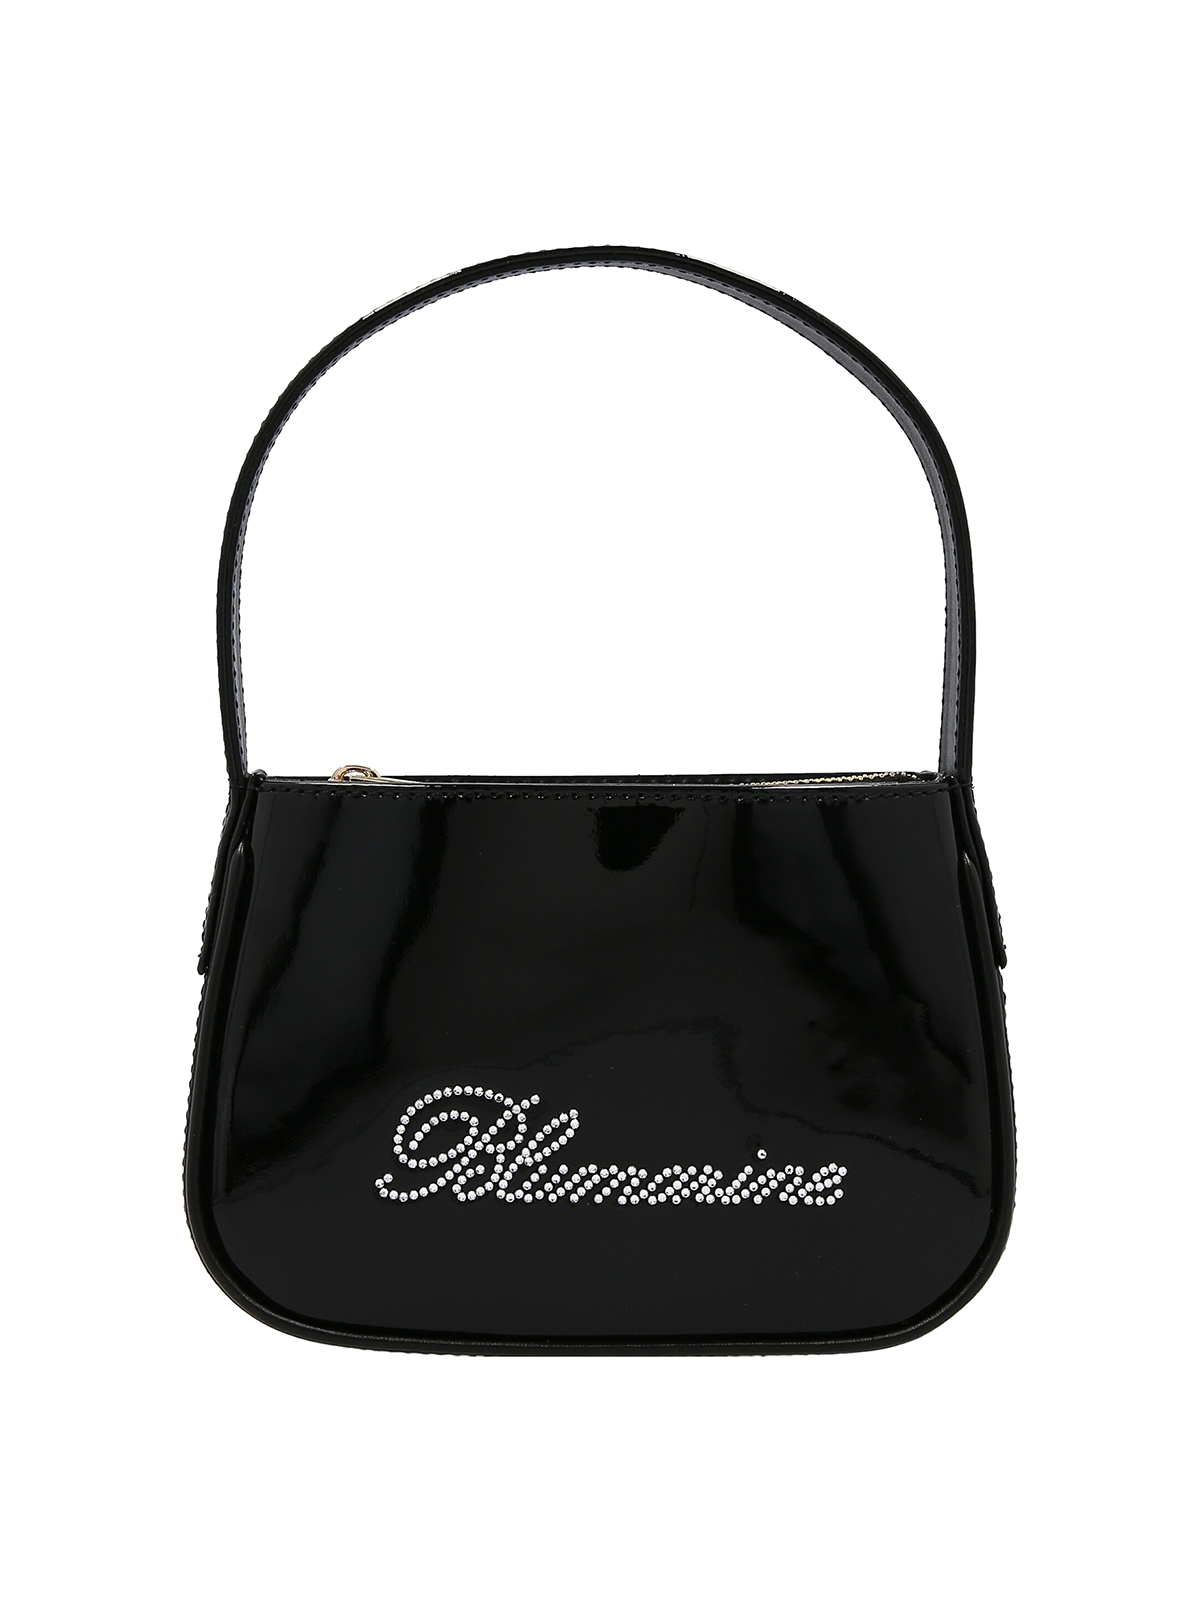 Blumarine Logo Print Leather Handbag In Black